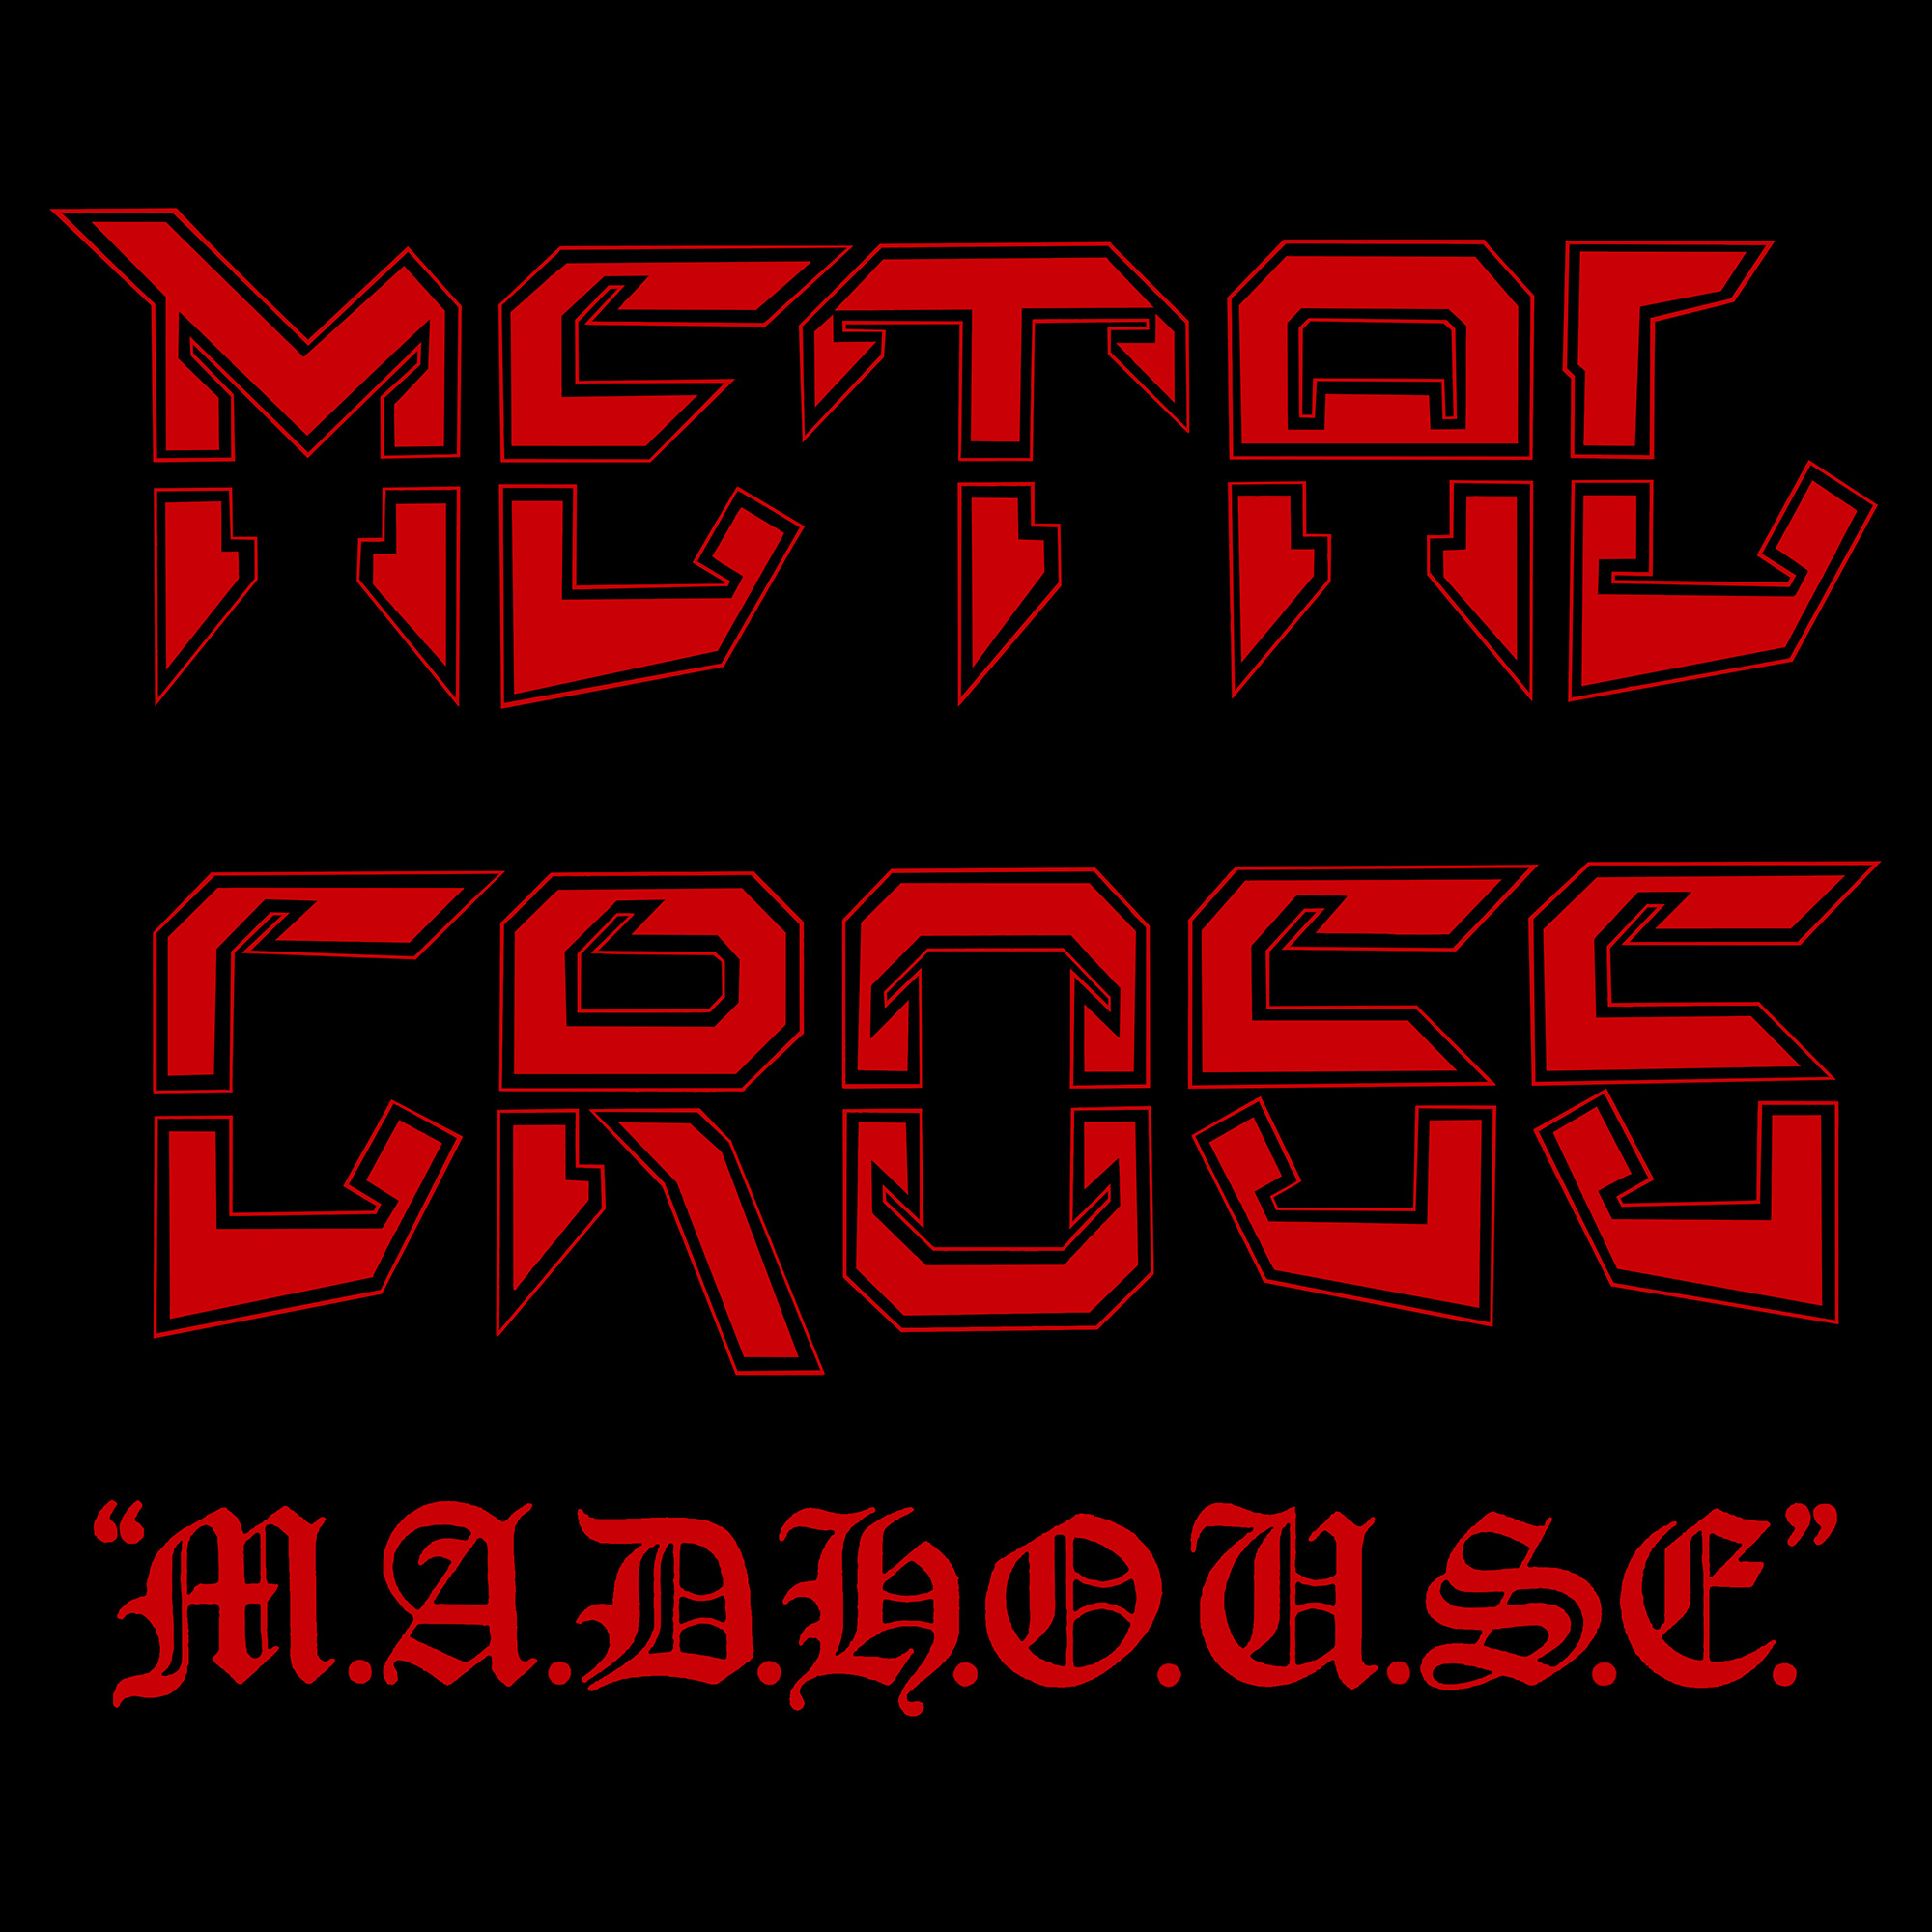 METAL CROSS - M.A.D.H.O.U.S.E